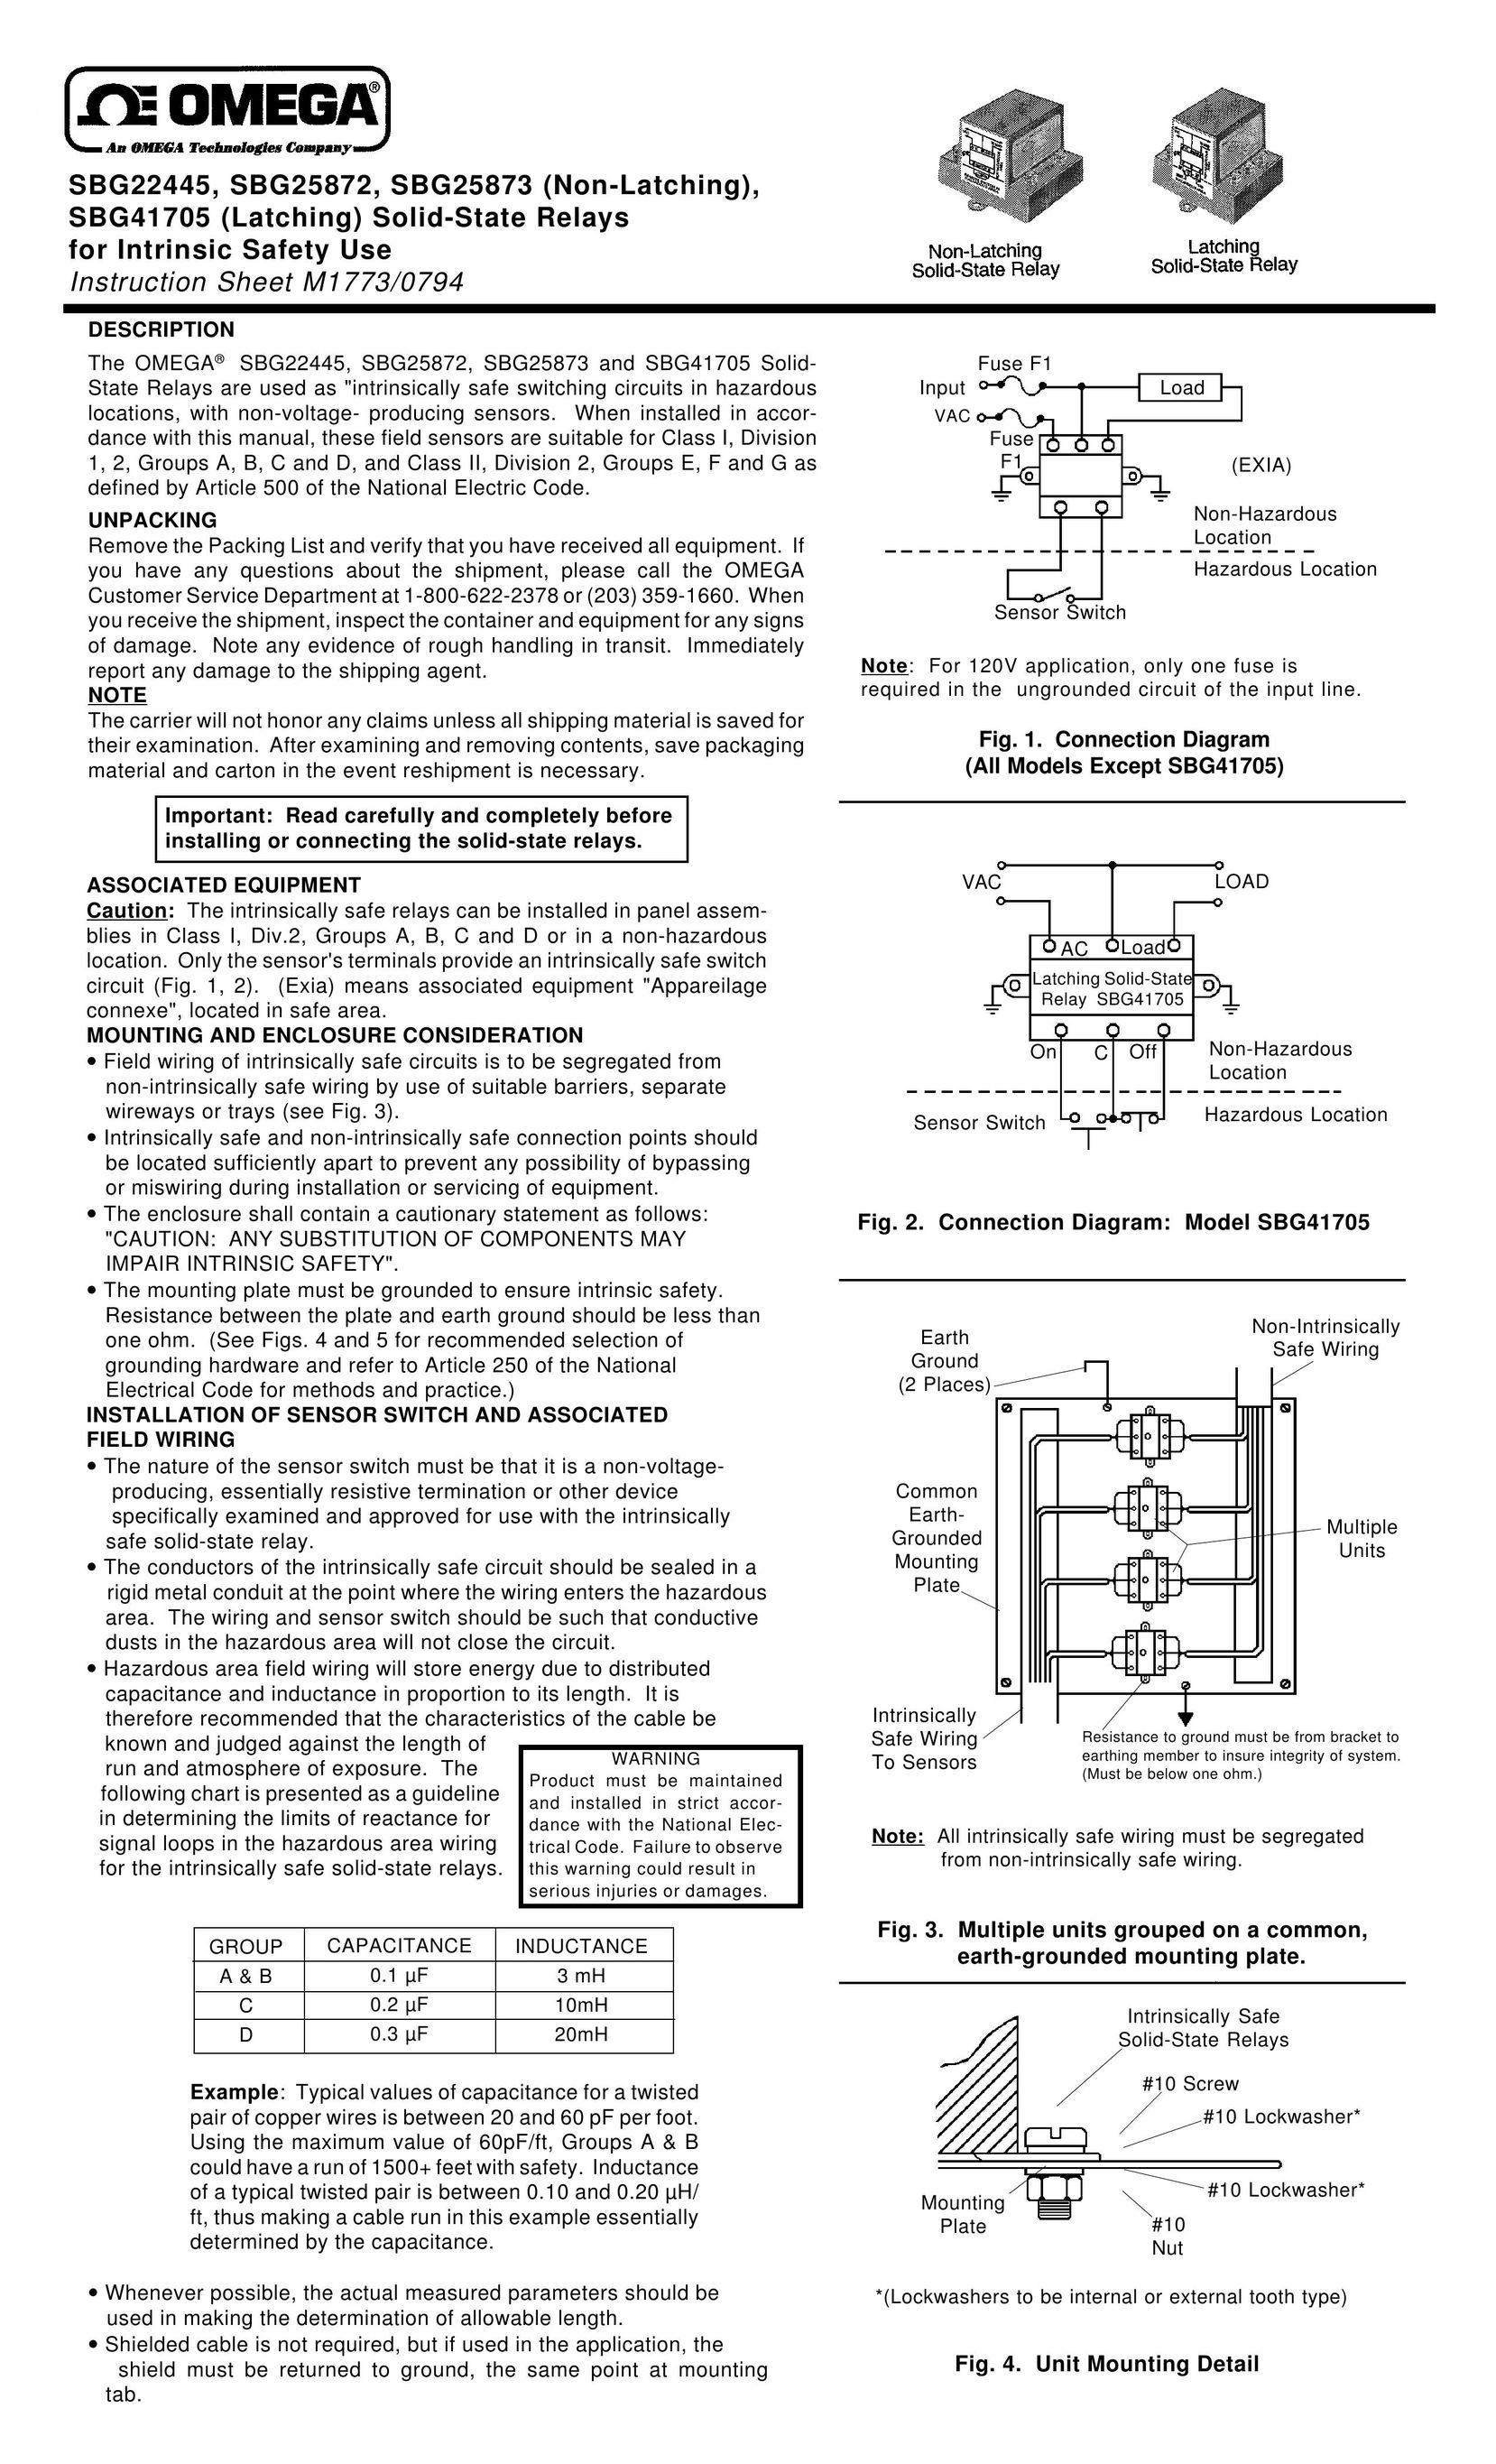 Omega Engineering SBG22445 Air Compressor User Manual